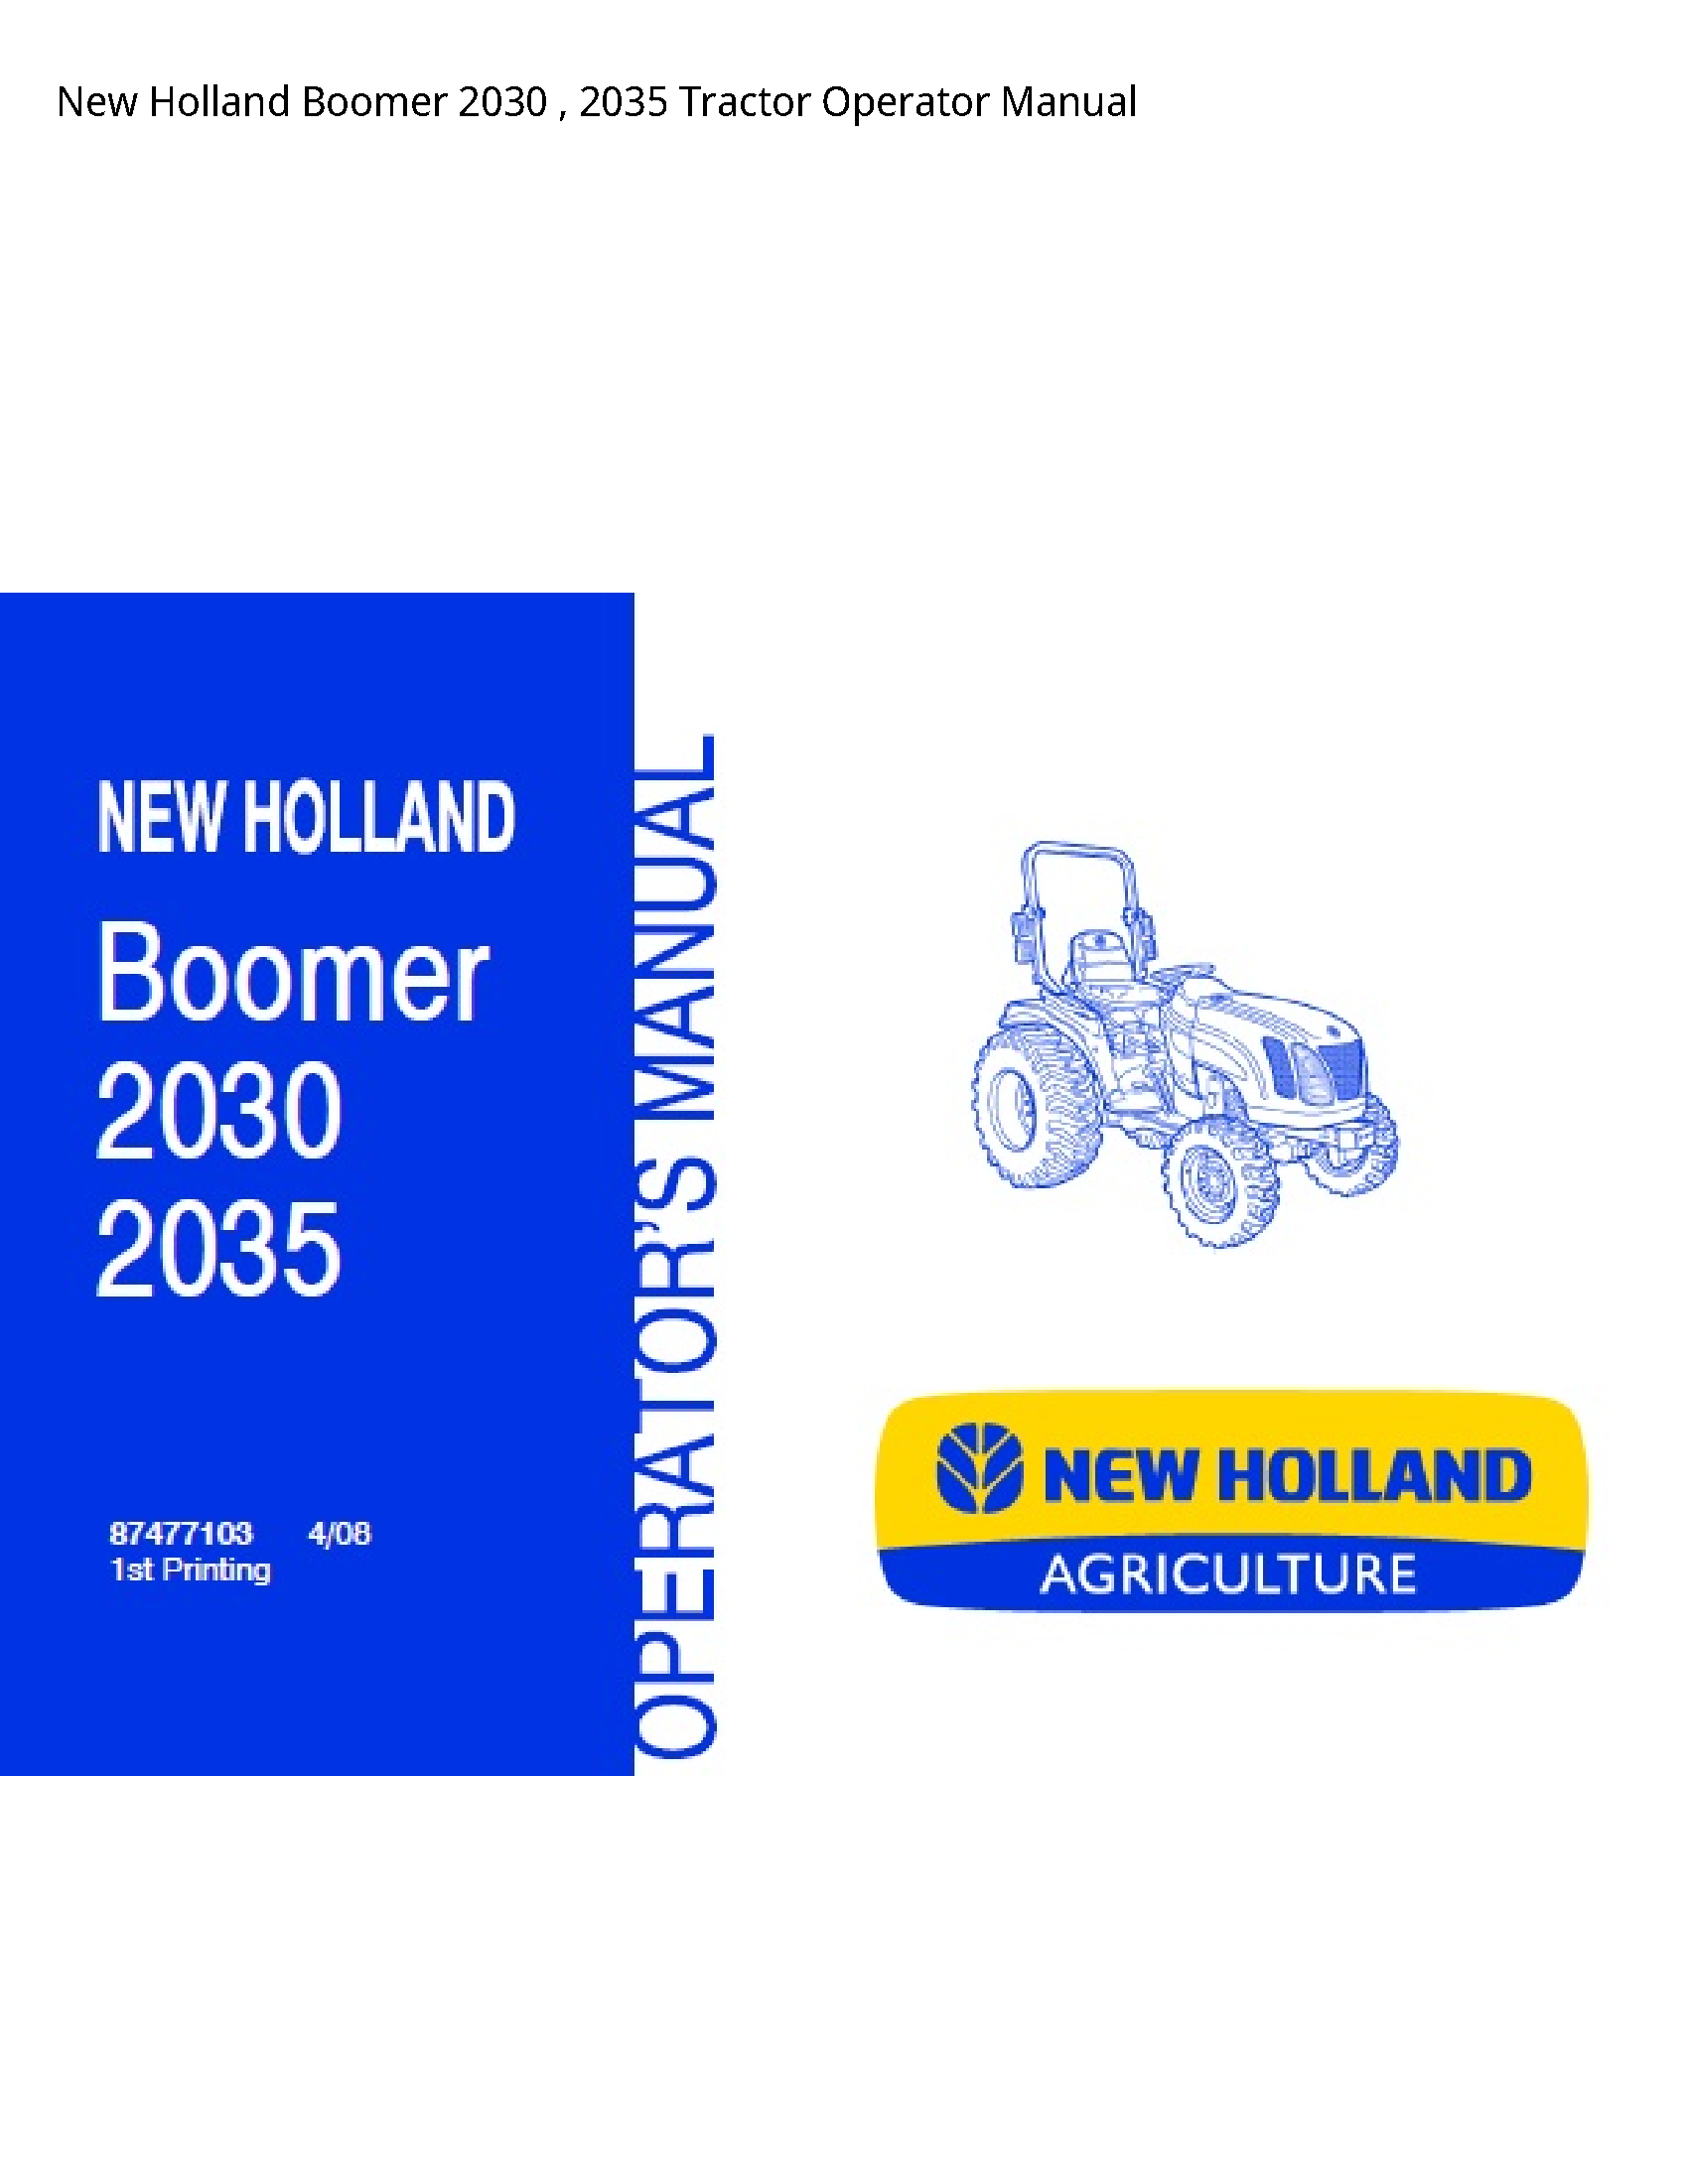 New Holland 2030 Boomer Tractor Operator manual